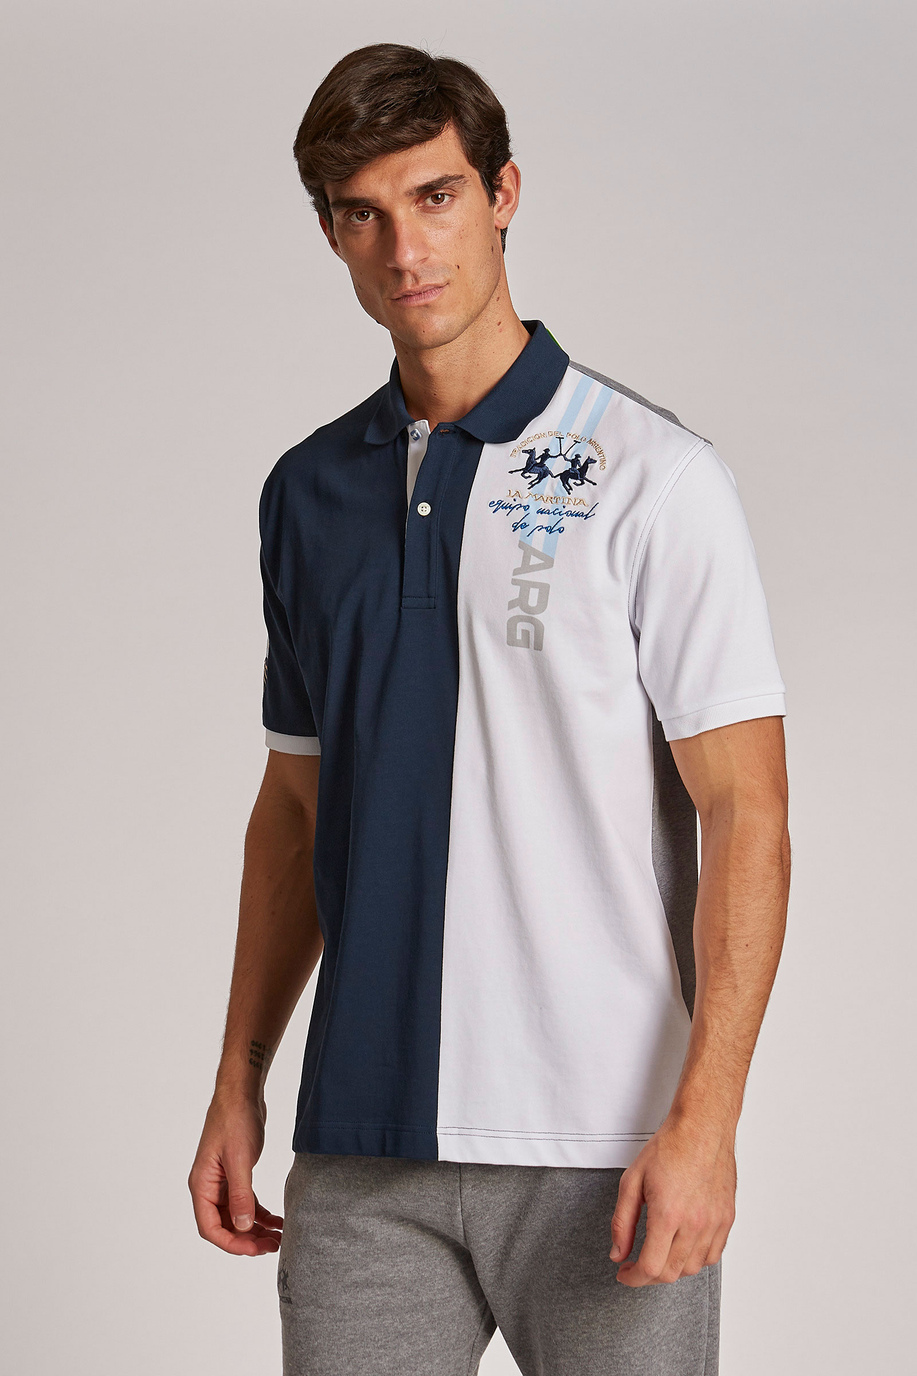 Herren-Poloshirt mit kurzem Arm aus 100 % Baumwolle, oversized Modell - SALE | La Martina - Official Online Shop